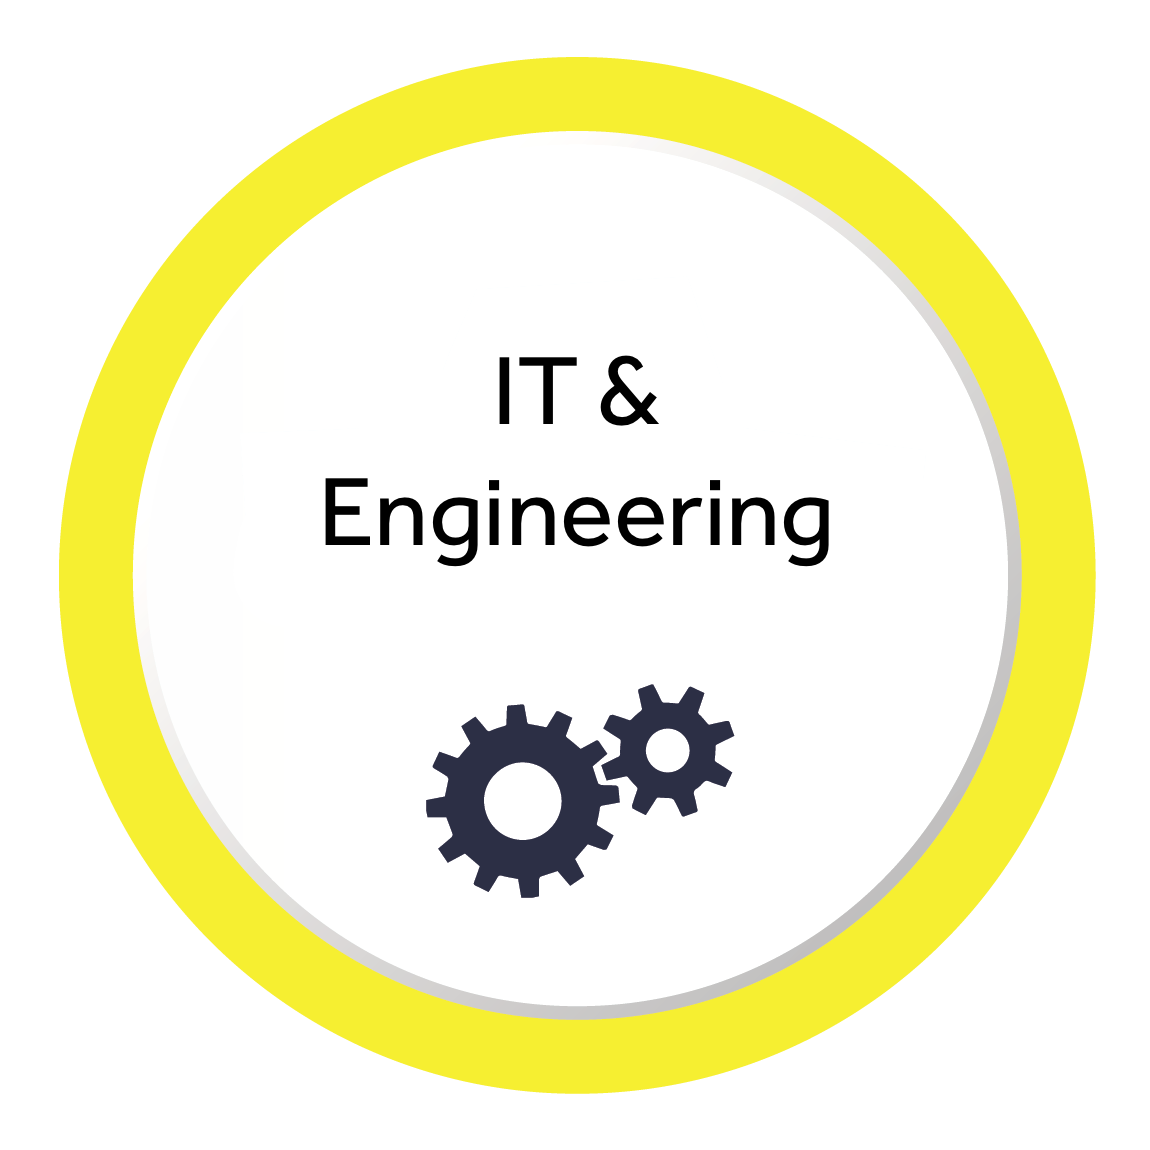 IT & Engineering